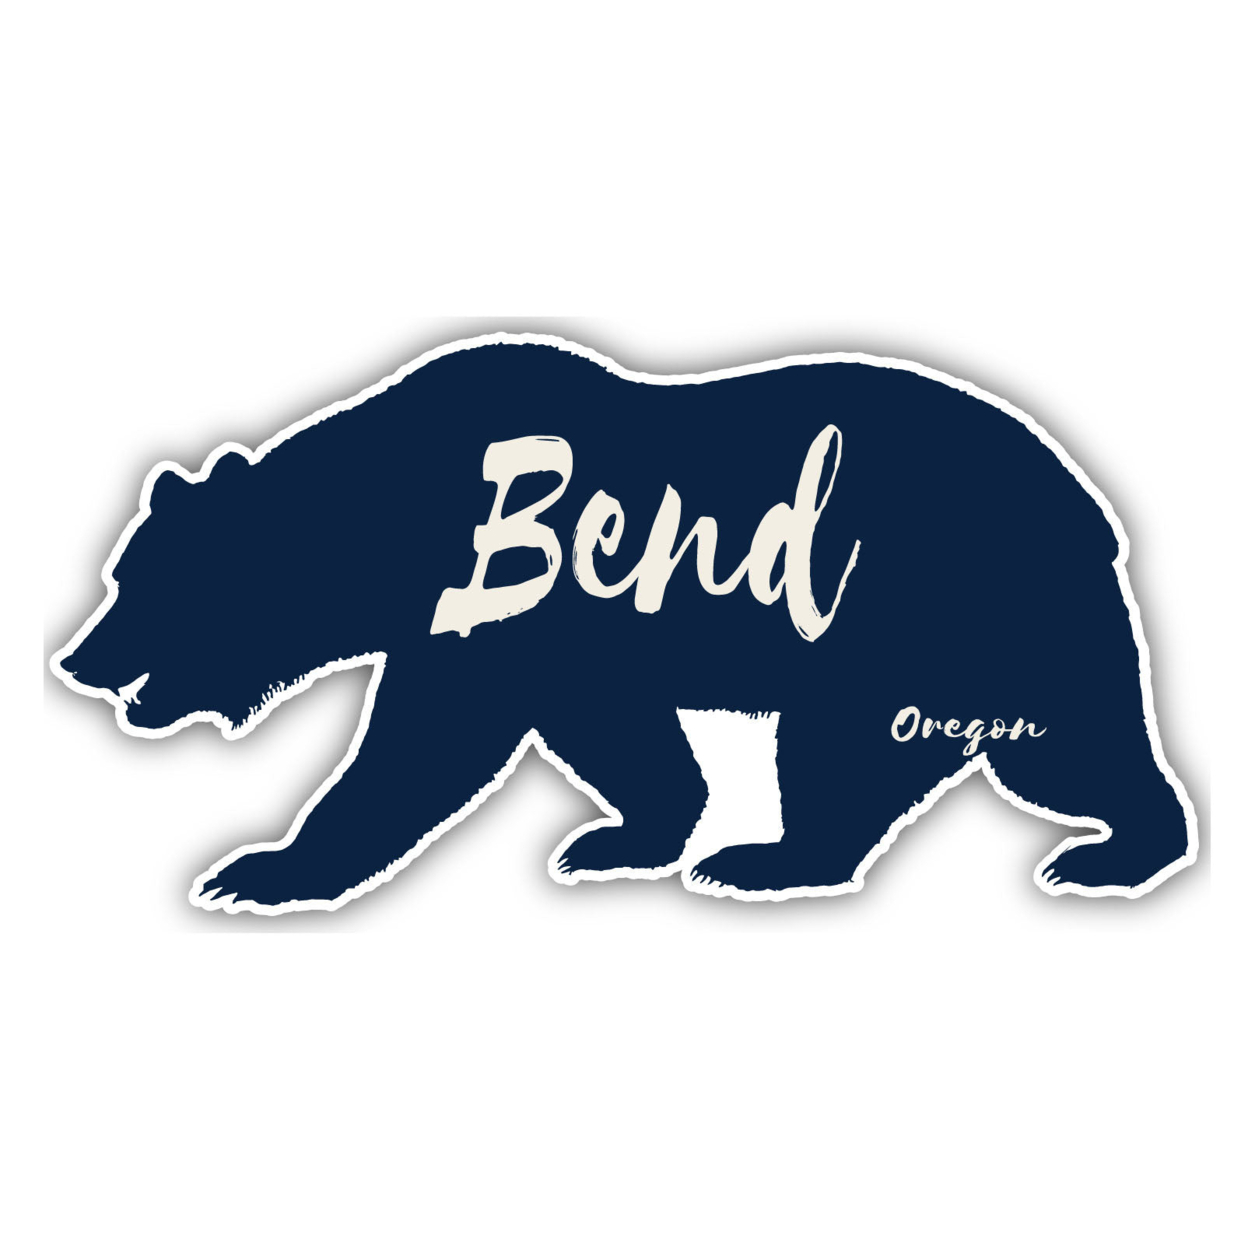 Bend Oregon Souvenir Decorative Stickers (Choose Theme And Size) - 4-Pack, 2-Inch, Tent